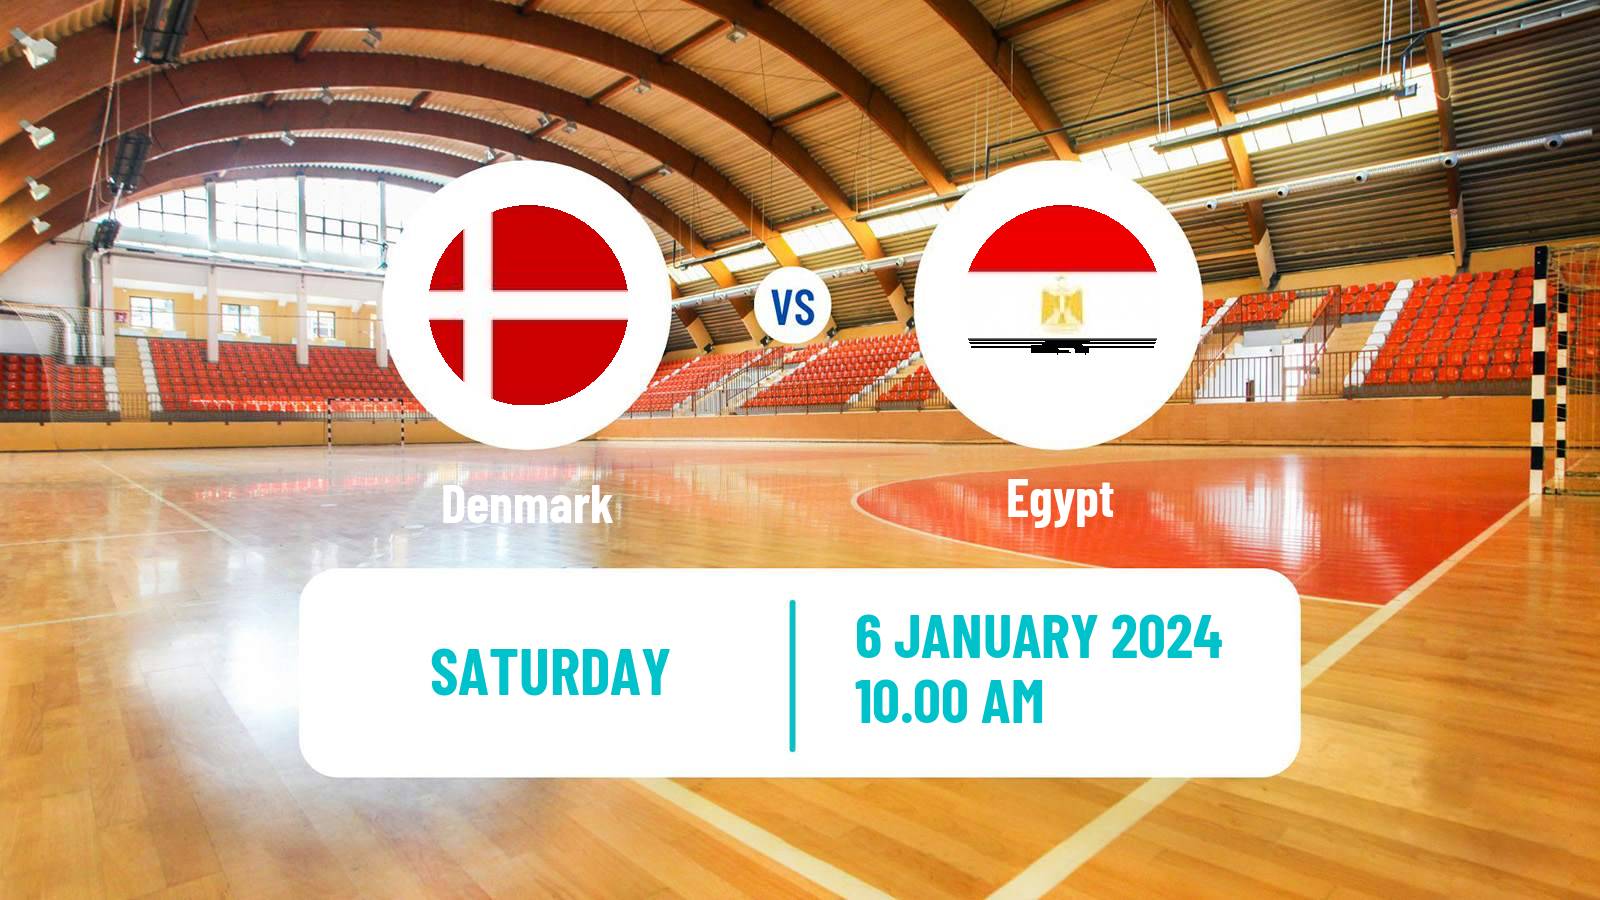 Handball Golden League Handball - Denmark Denmark - Egypt